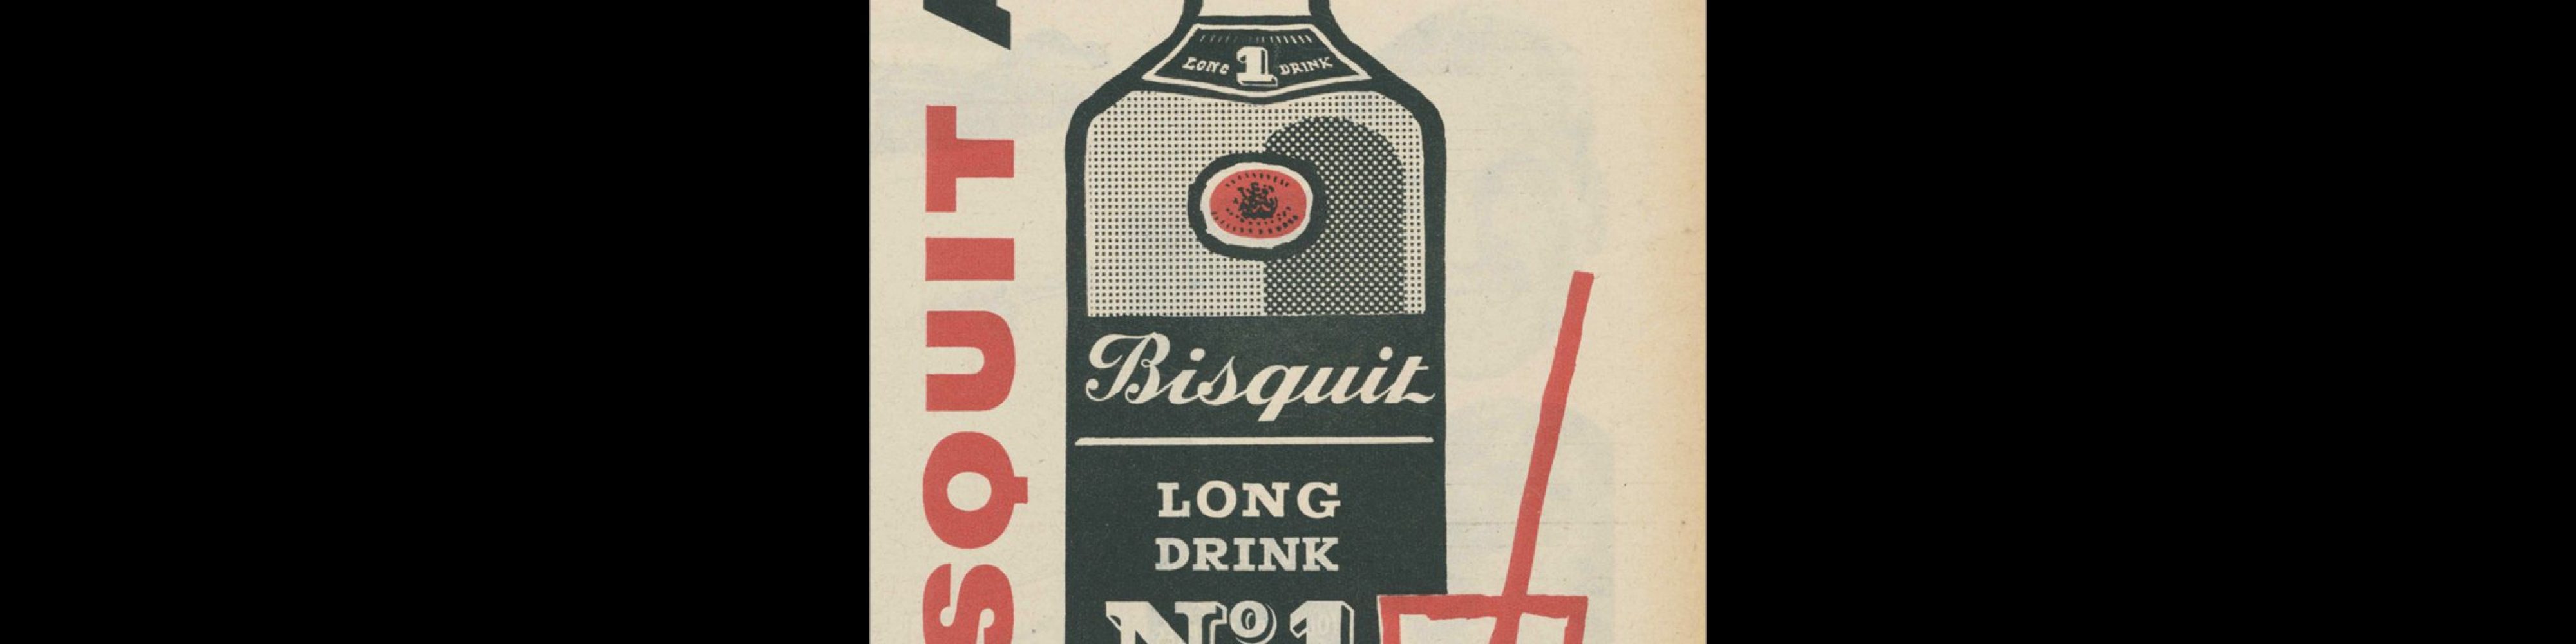 Bisquit Cognac, Press Advertisement, 1950s. Designed by Guy Georget